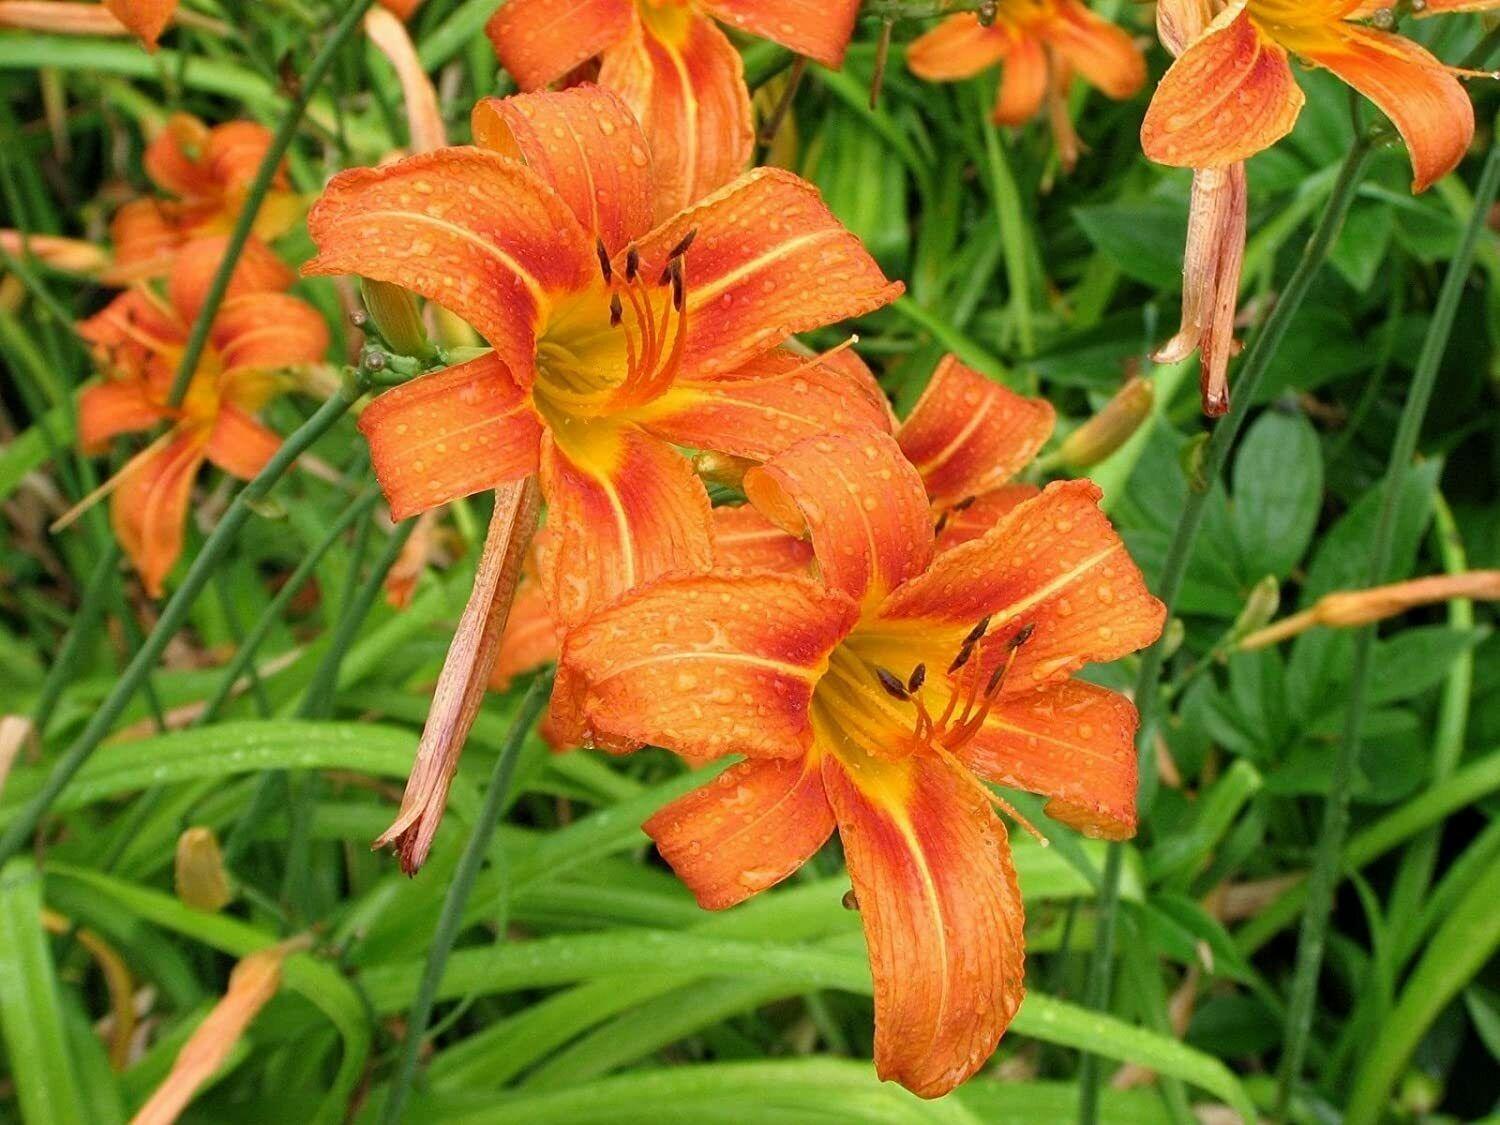 10 Wild Orange Daylily Fans / Root Systems - Ditch Lily - Hemerocallis fulva - The Nursery Center